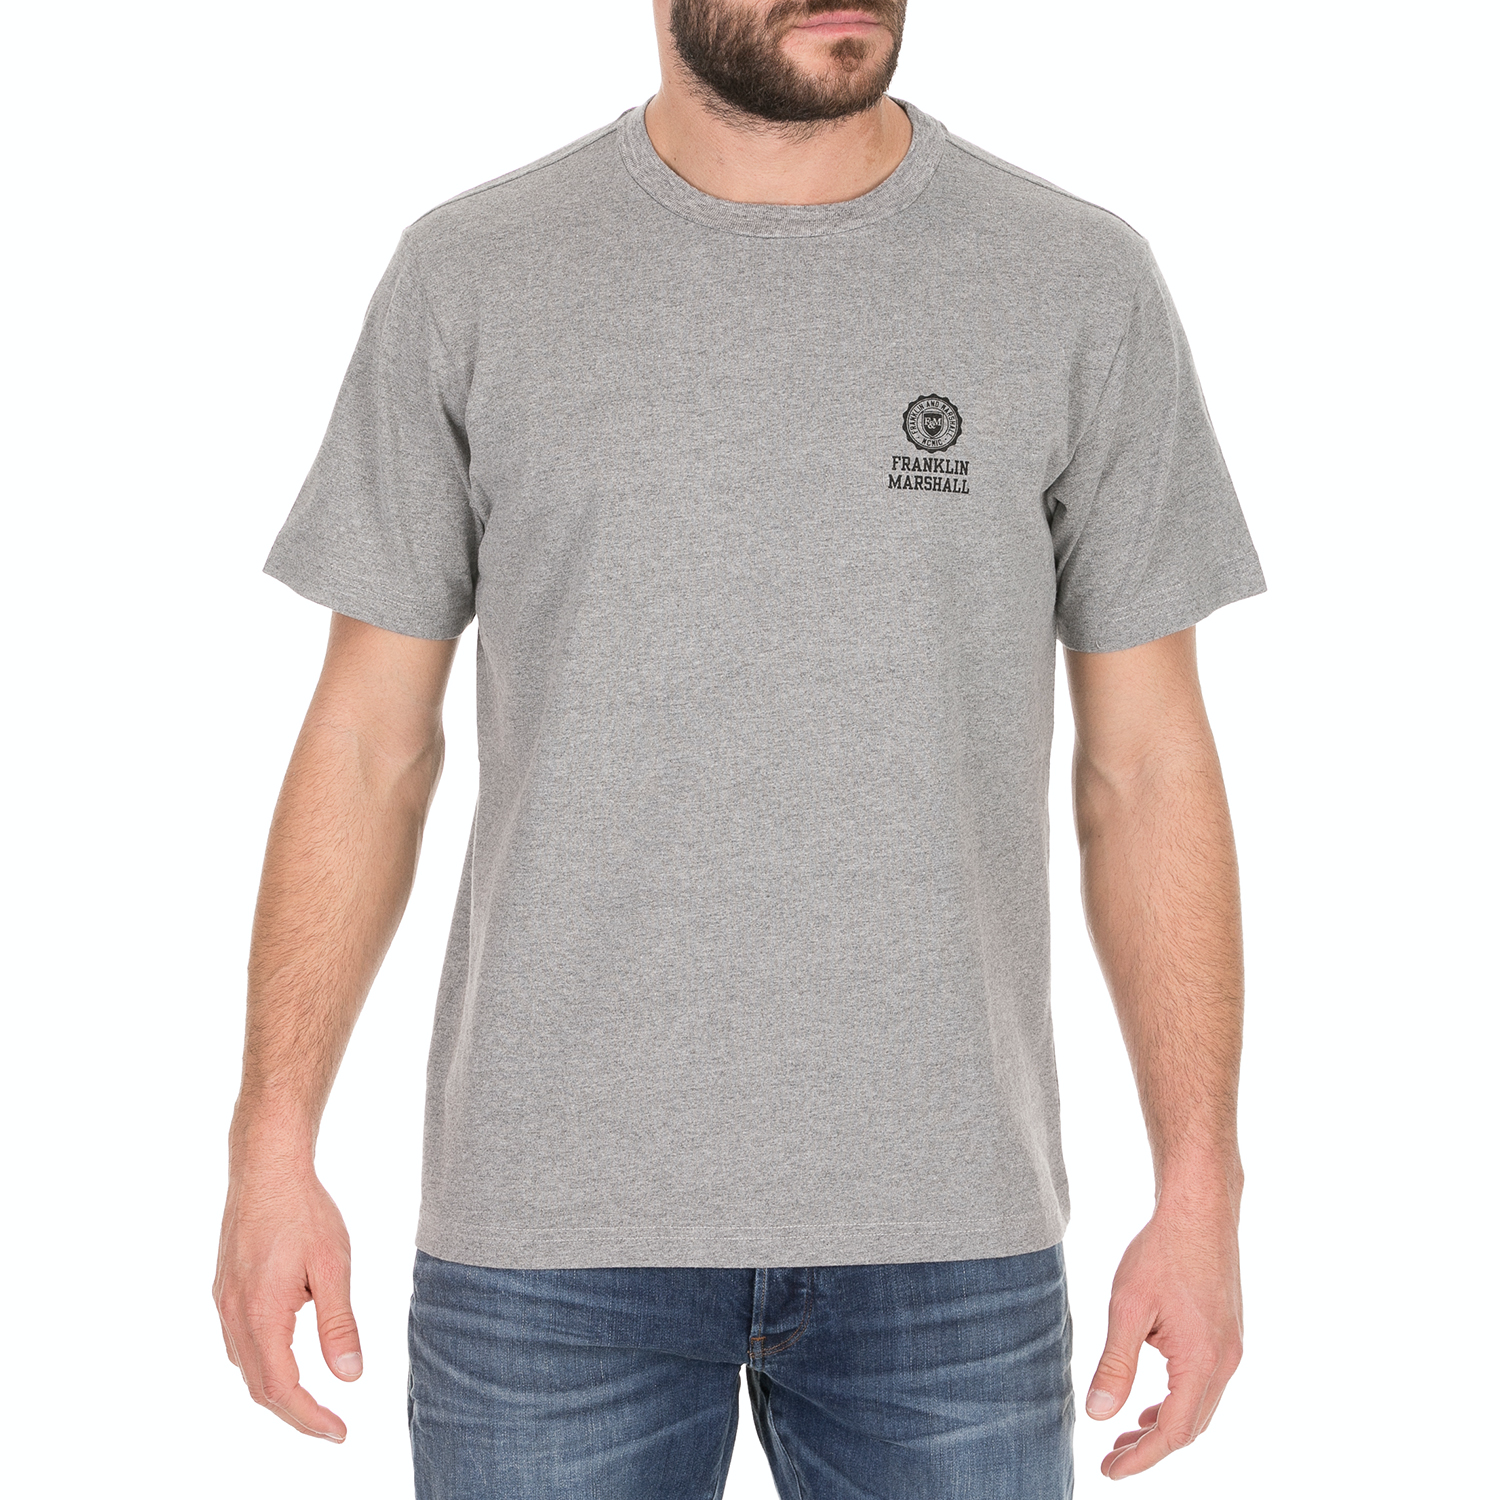 FRANKLIN & MARSHALL - Ανδρικό t-shirt FRANKLIN & MARSHALL γκρι Ανδρικά/Ρούχα/Μπλούζες/Κοντομάνικες